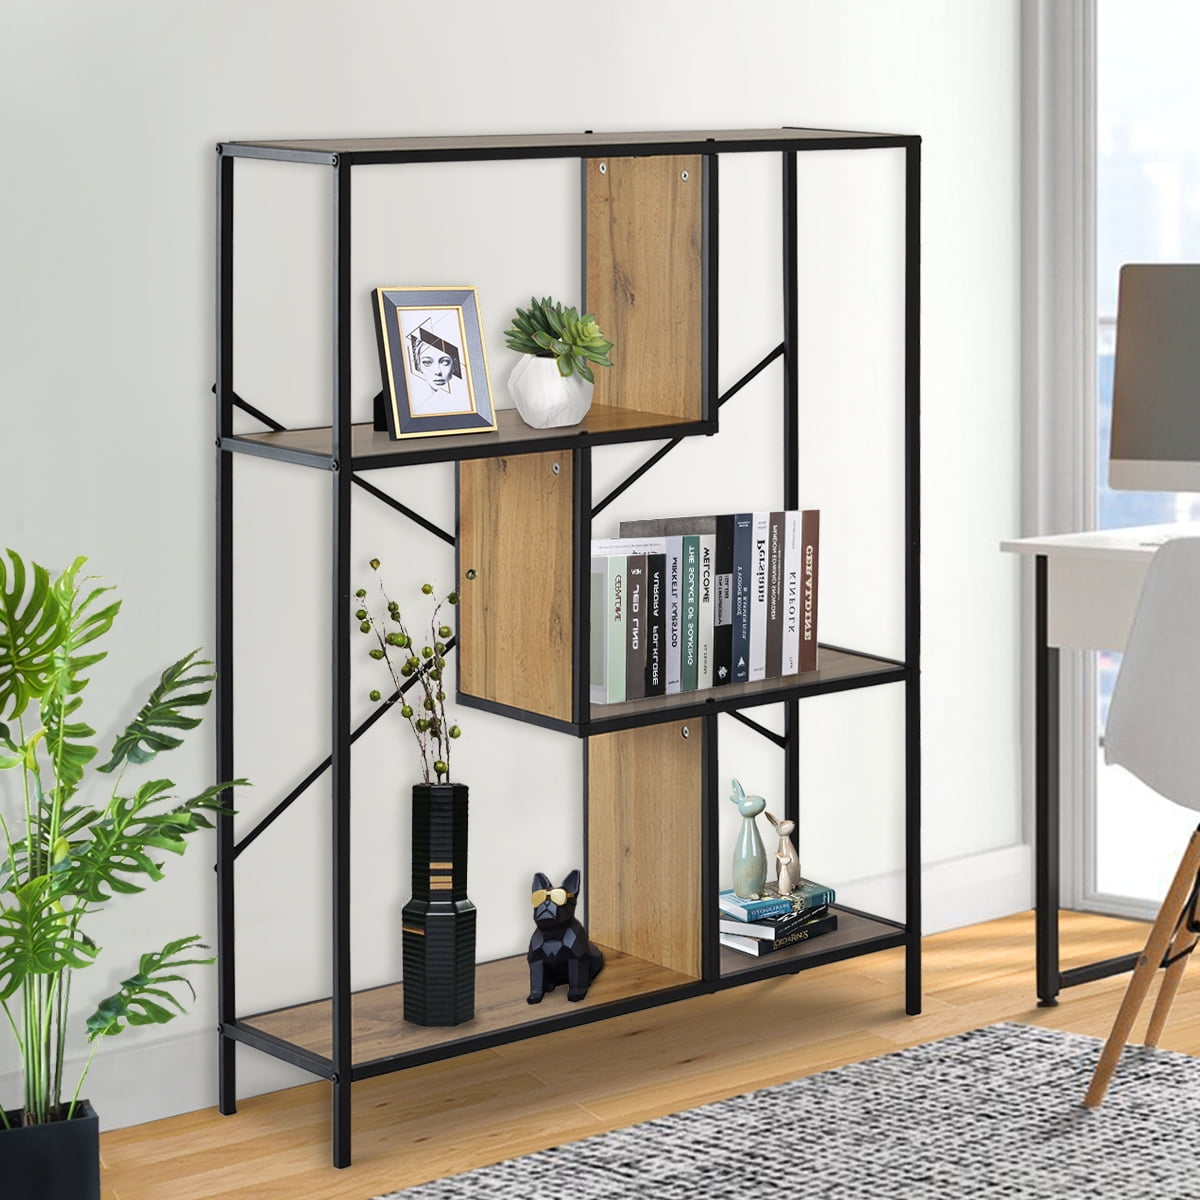 4 Tier Rustic Industrial Bookshelf, Metal Frame Storage Shelf Bookcase